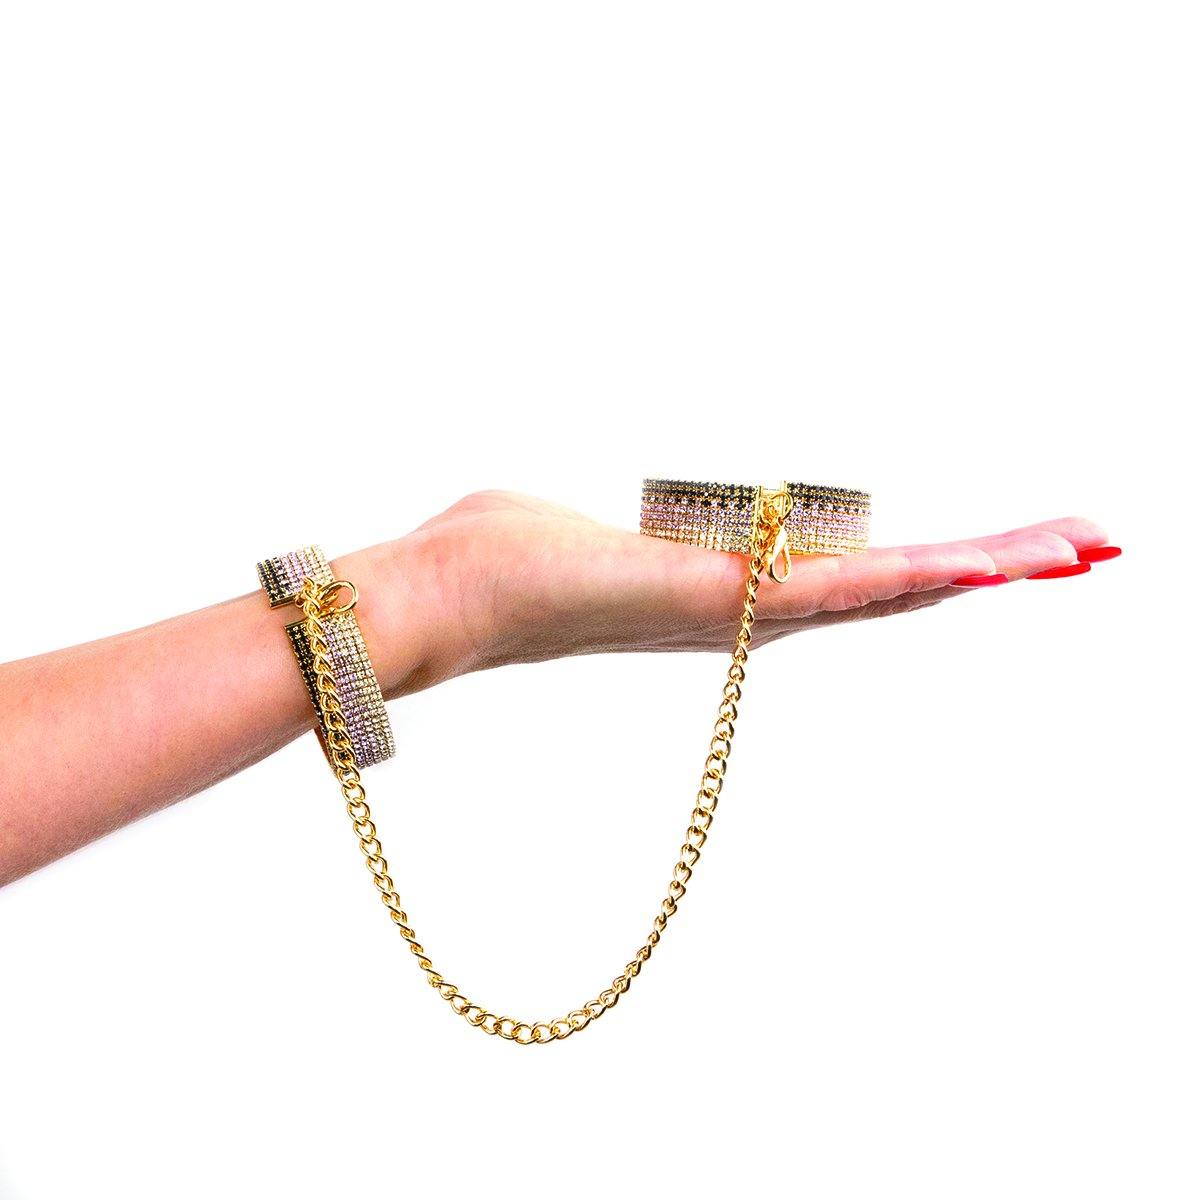 Rianne S Diamond Liz Handcuffs - Buy At Luxury Toy X - Free 3-Day Shipping